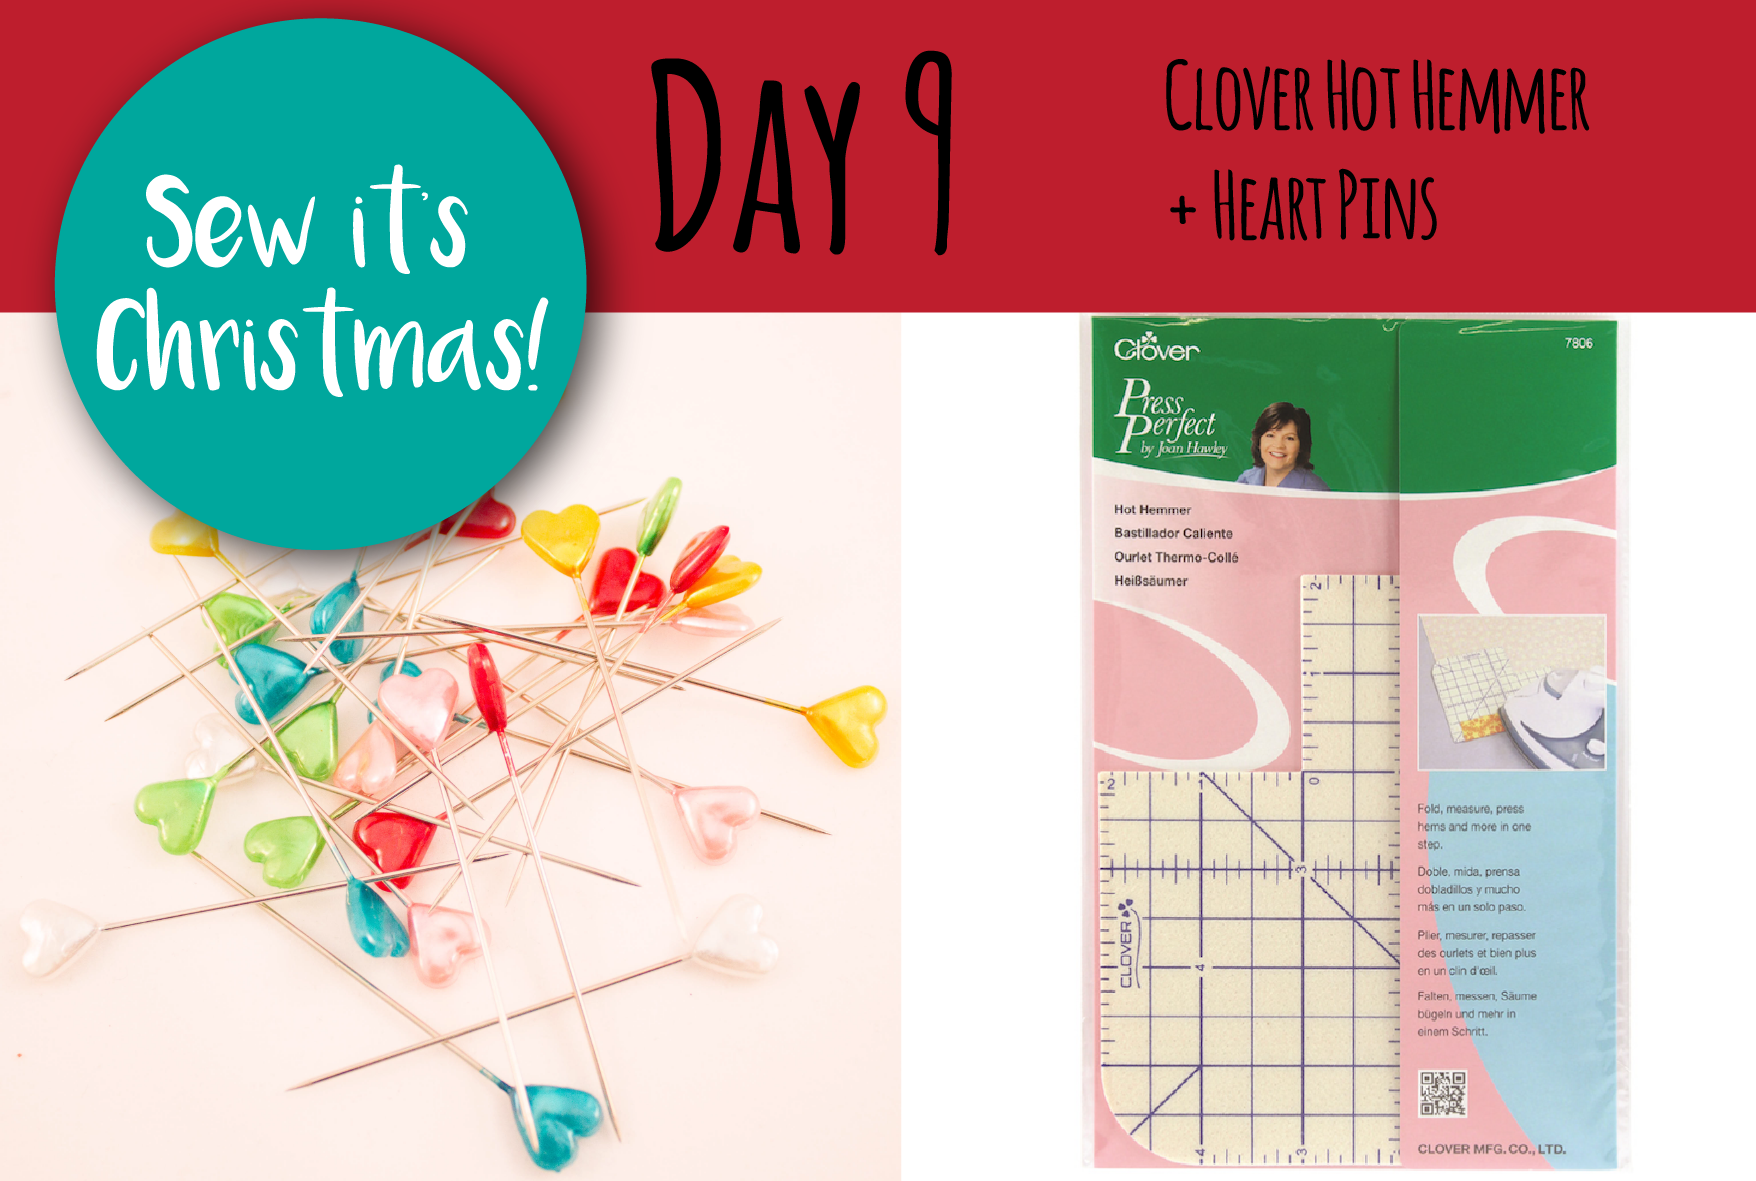 SEW IT'S CHRISTMAS - Day 9: Clover Hot Hemmer + Heart Pins